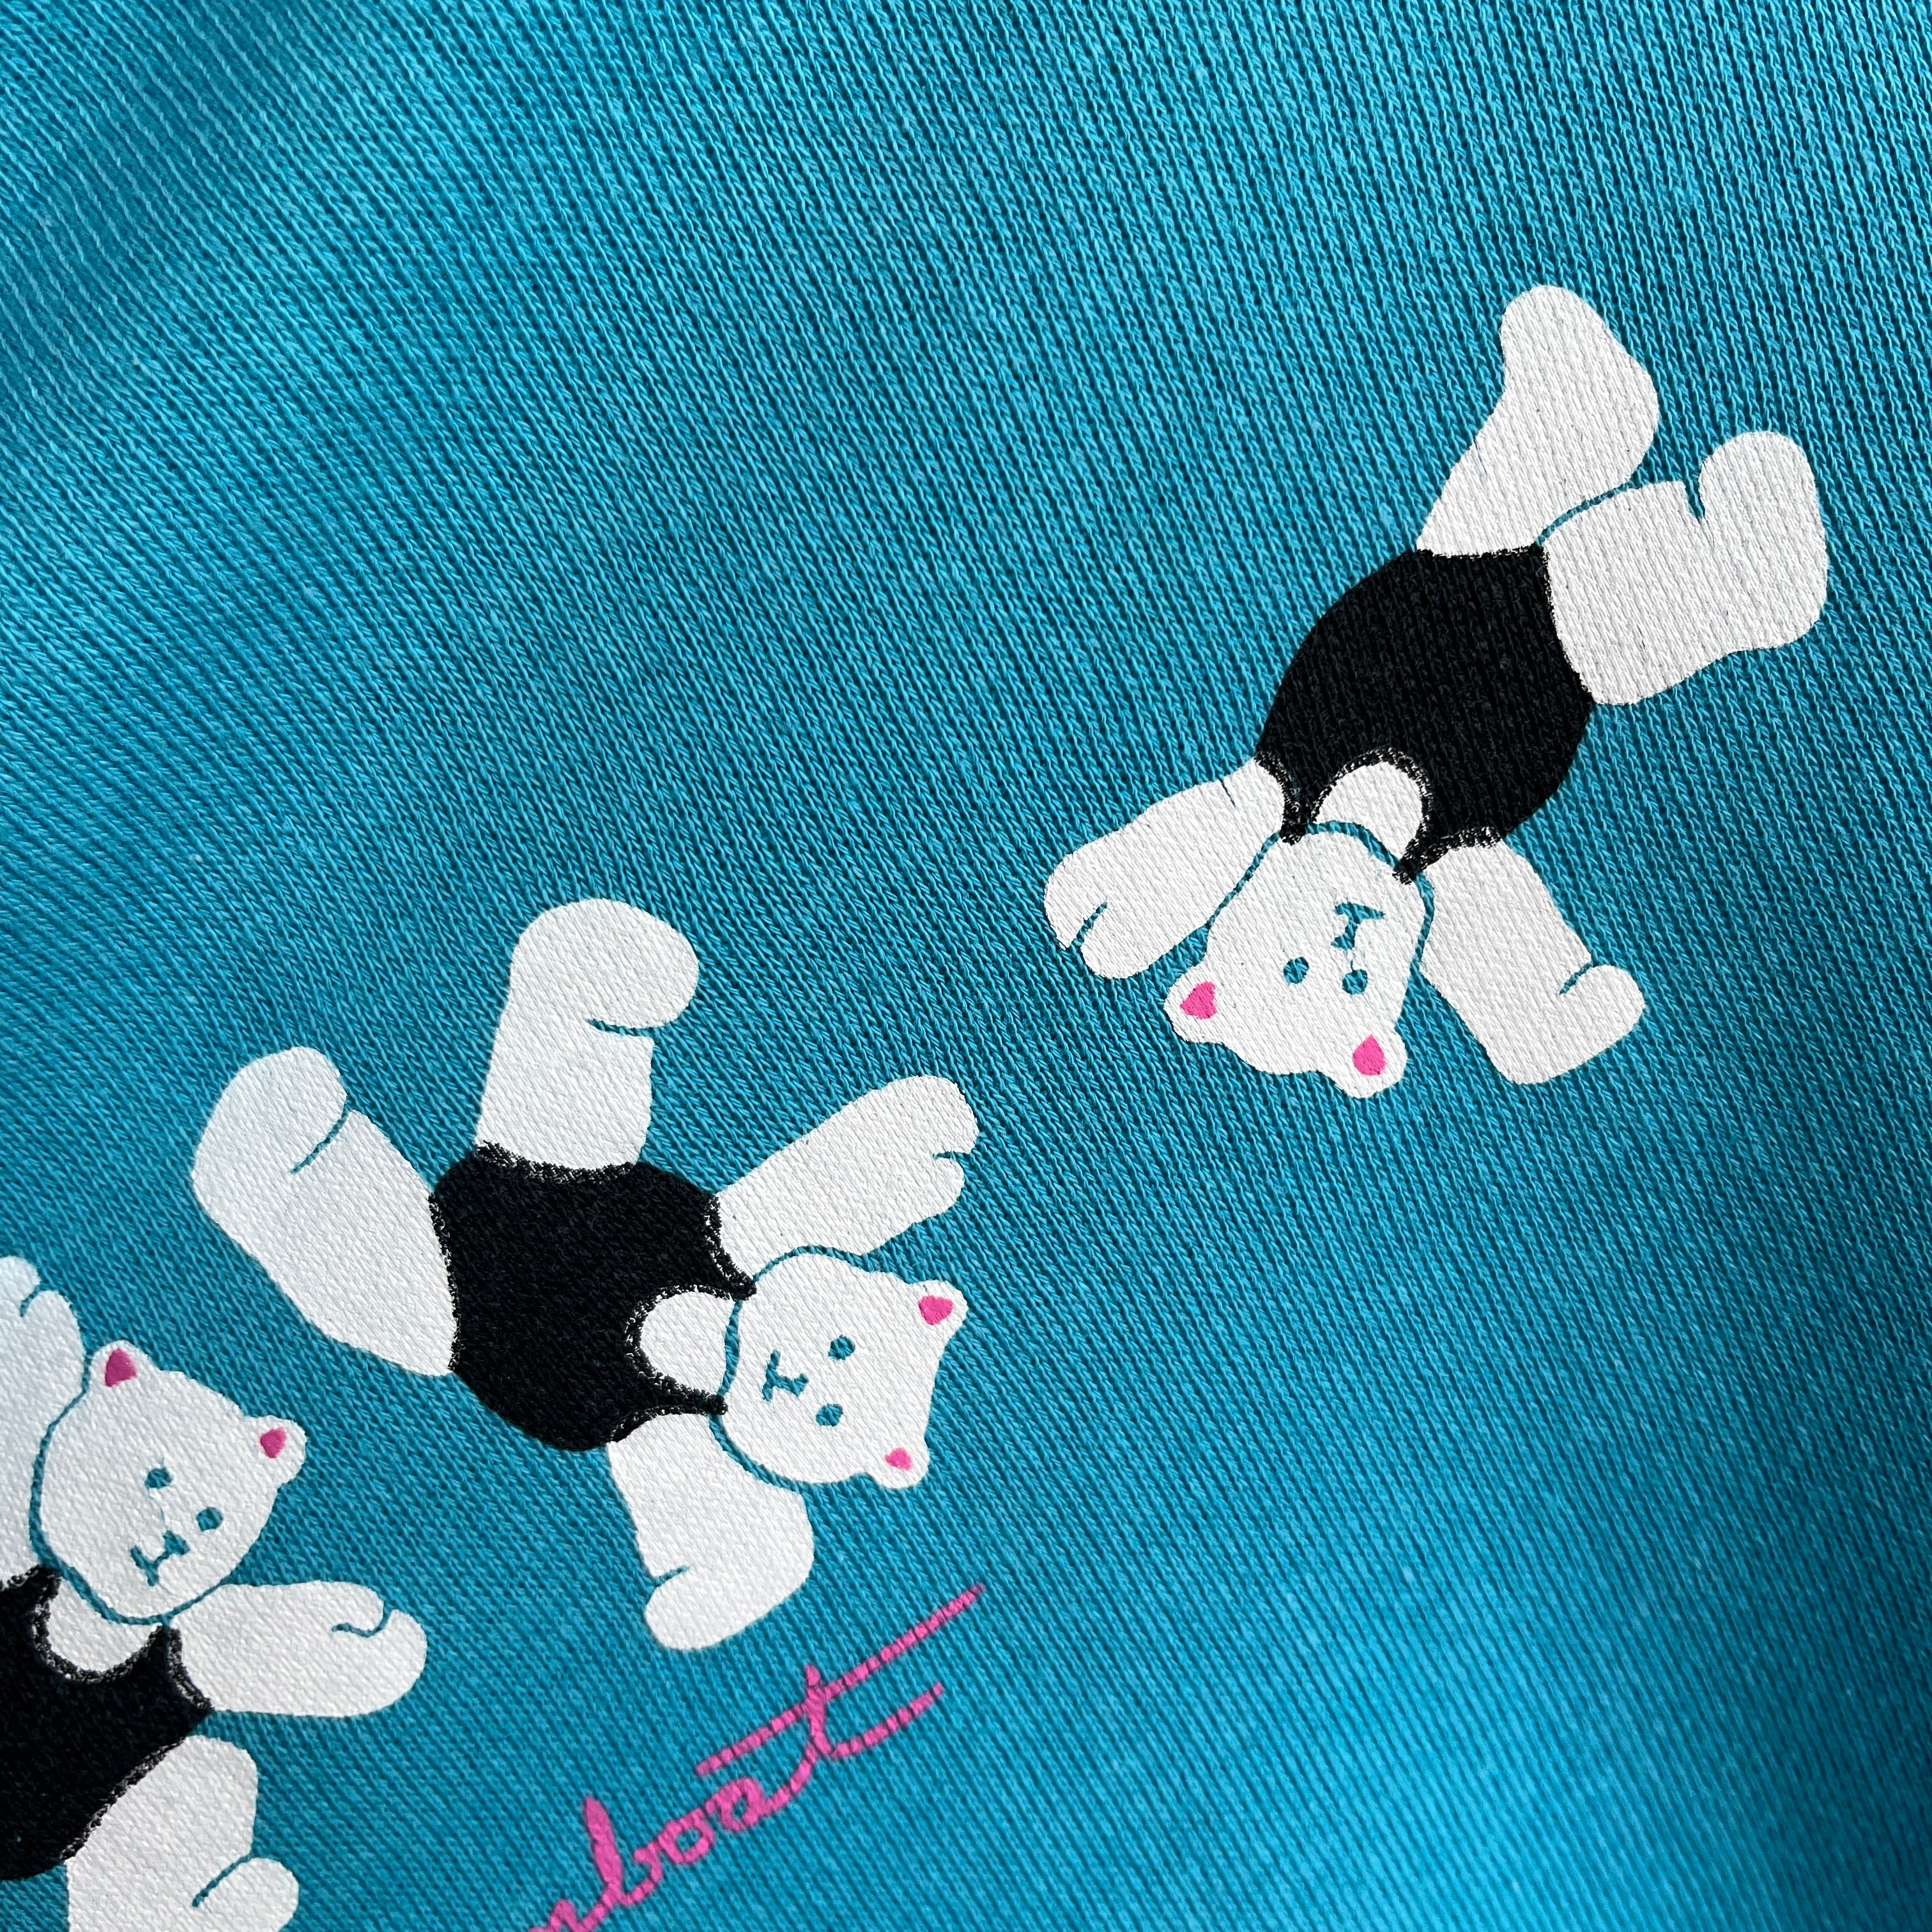 1980s Steamboat Gymnastic Teddy Bears Sweatshirt - OH MY